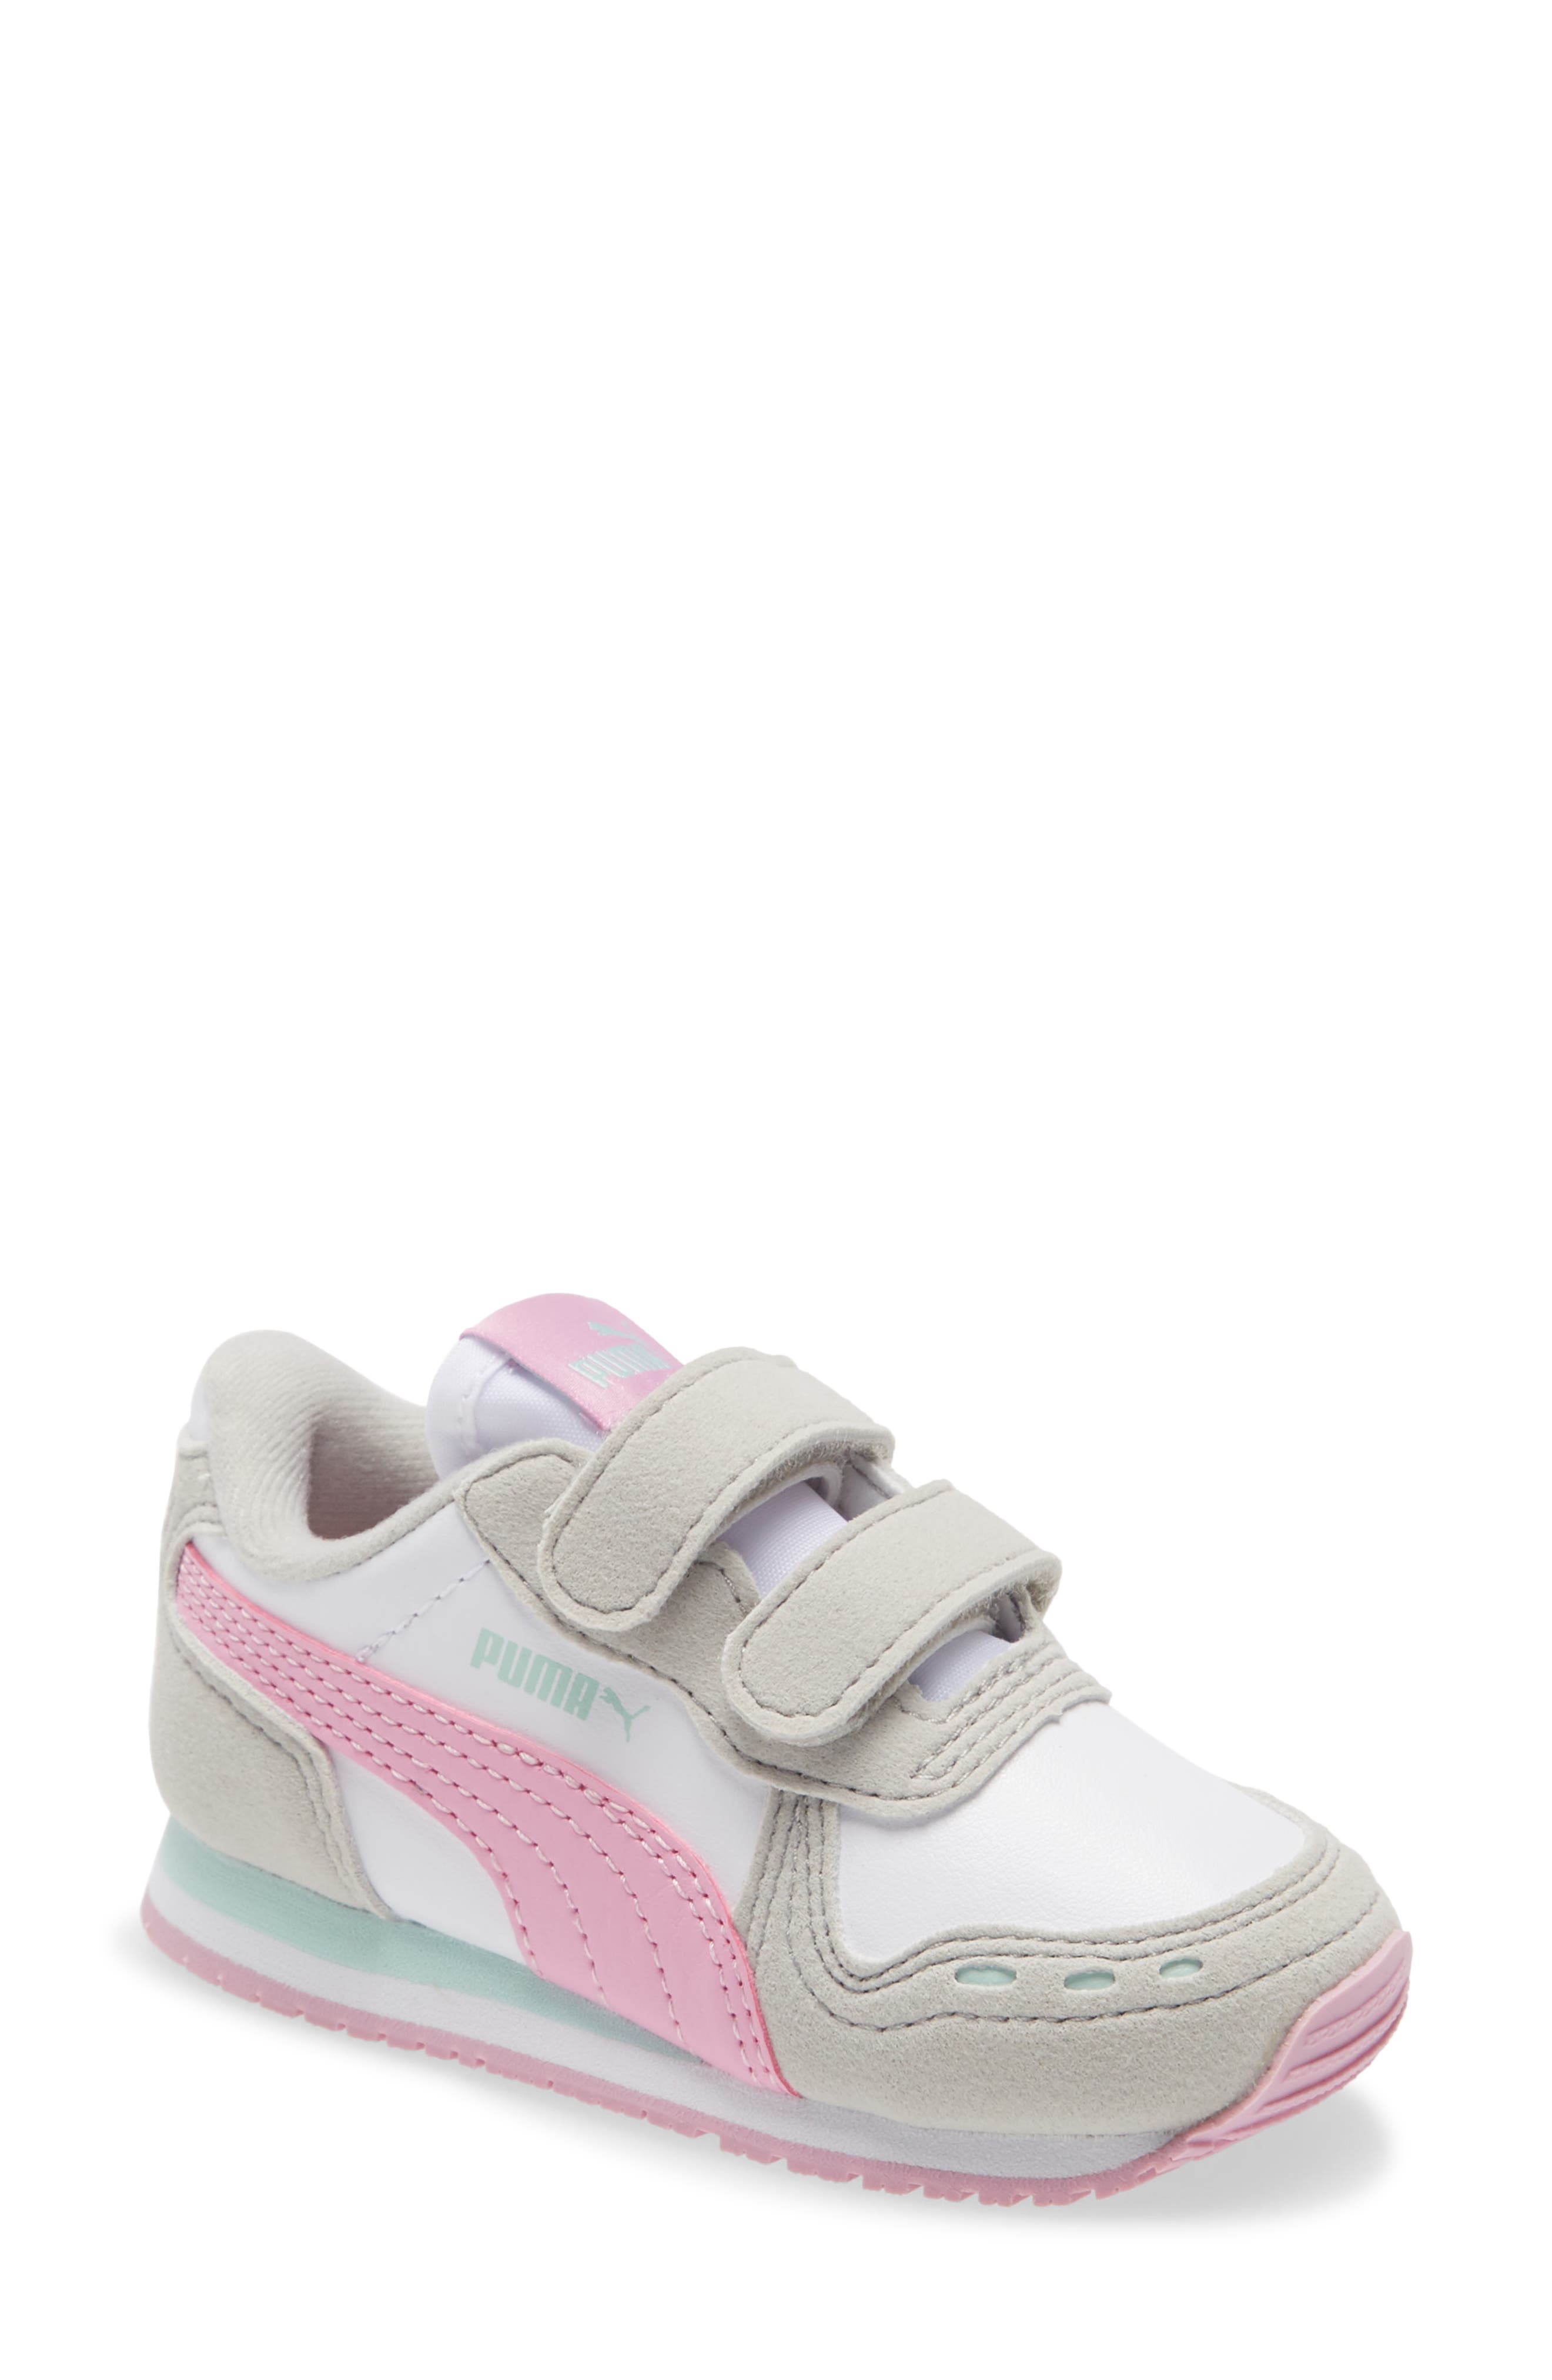 baby puma sneakers